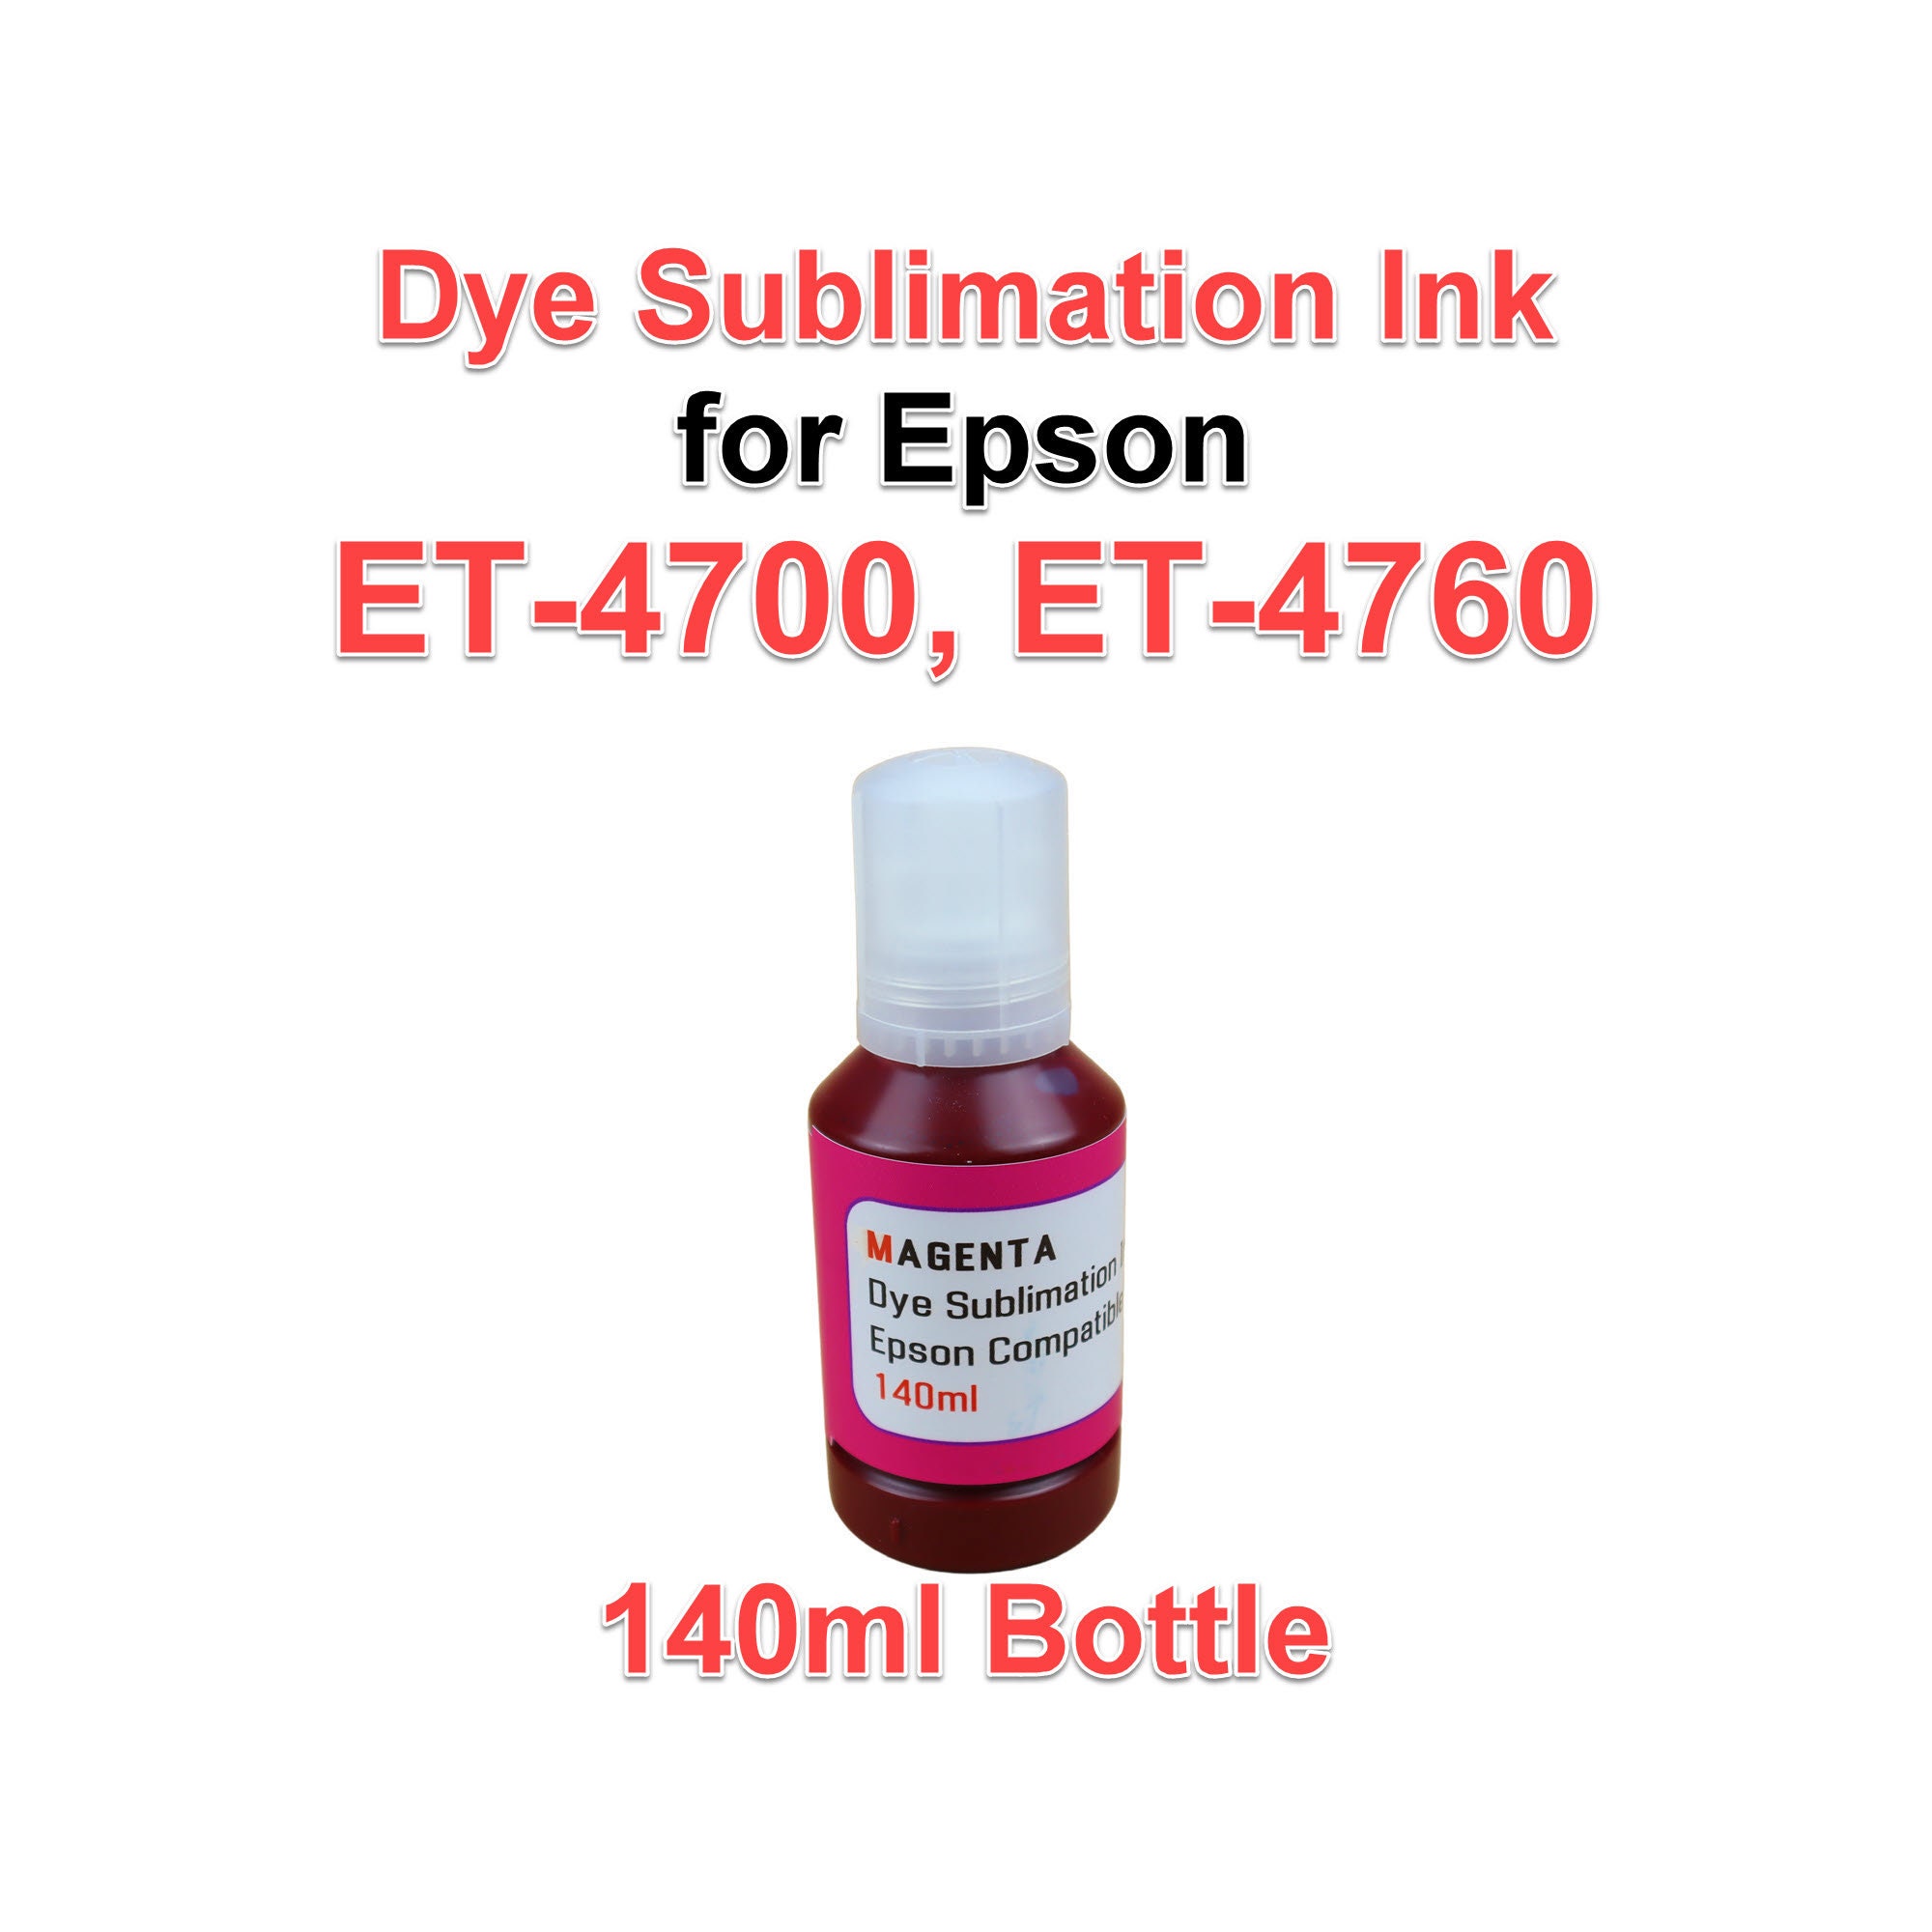 Sublimation Ink for Epson Et 4700 